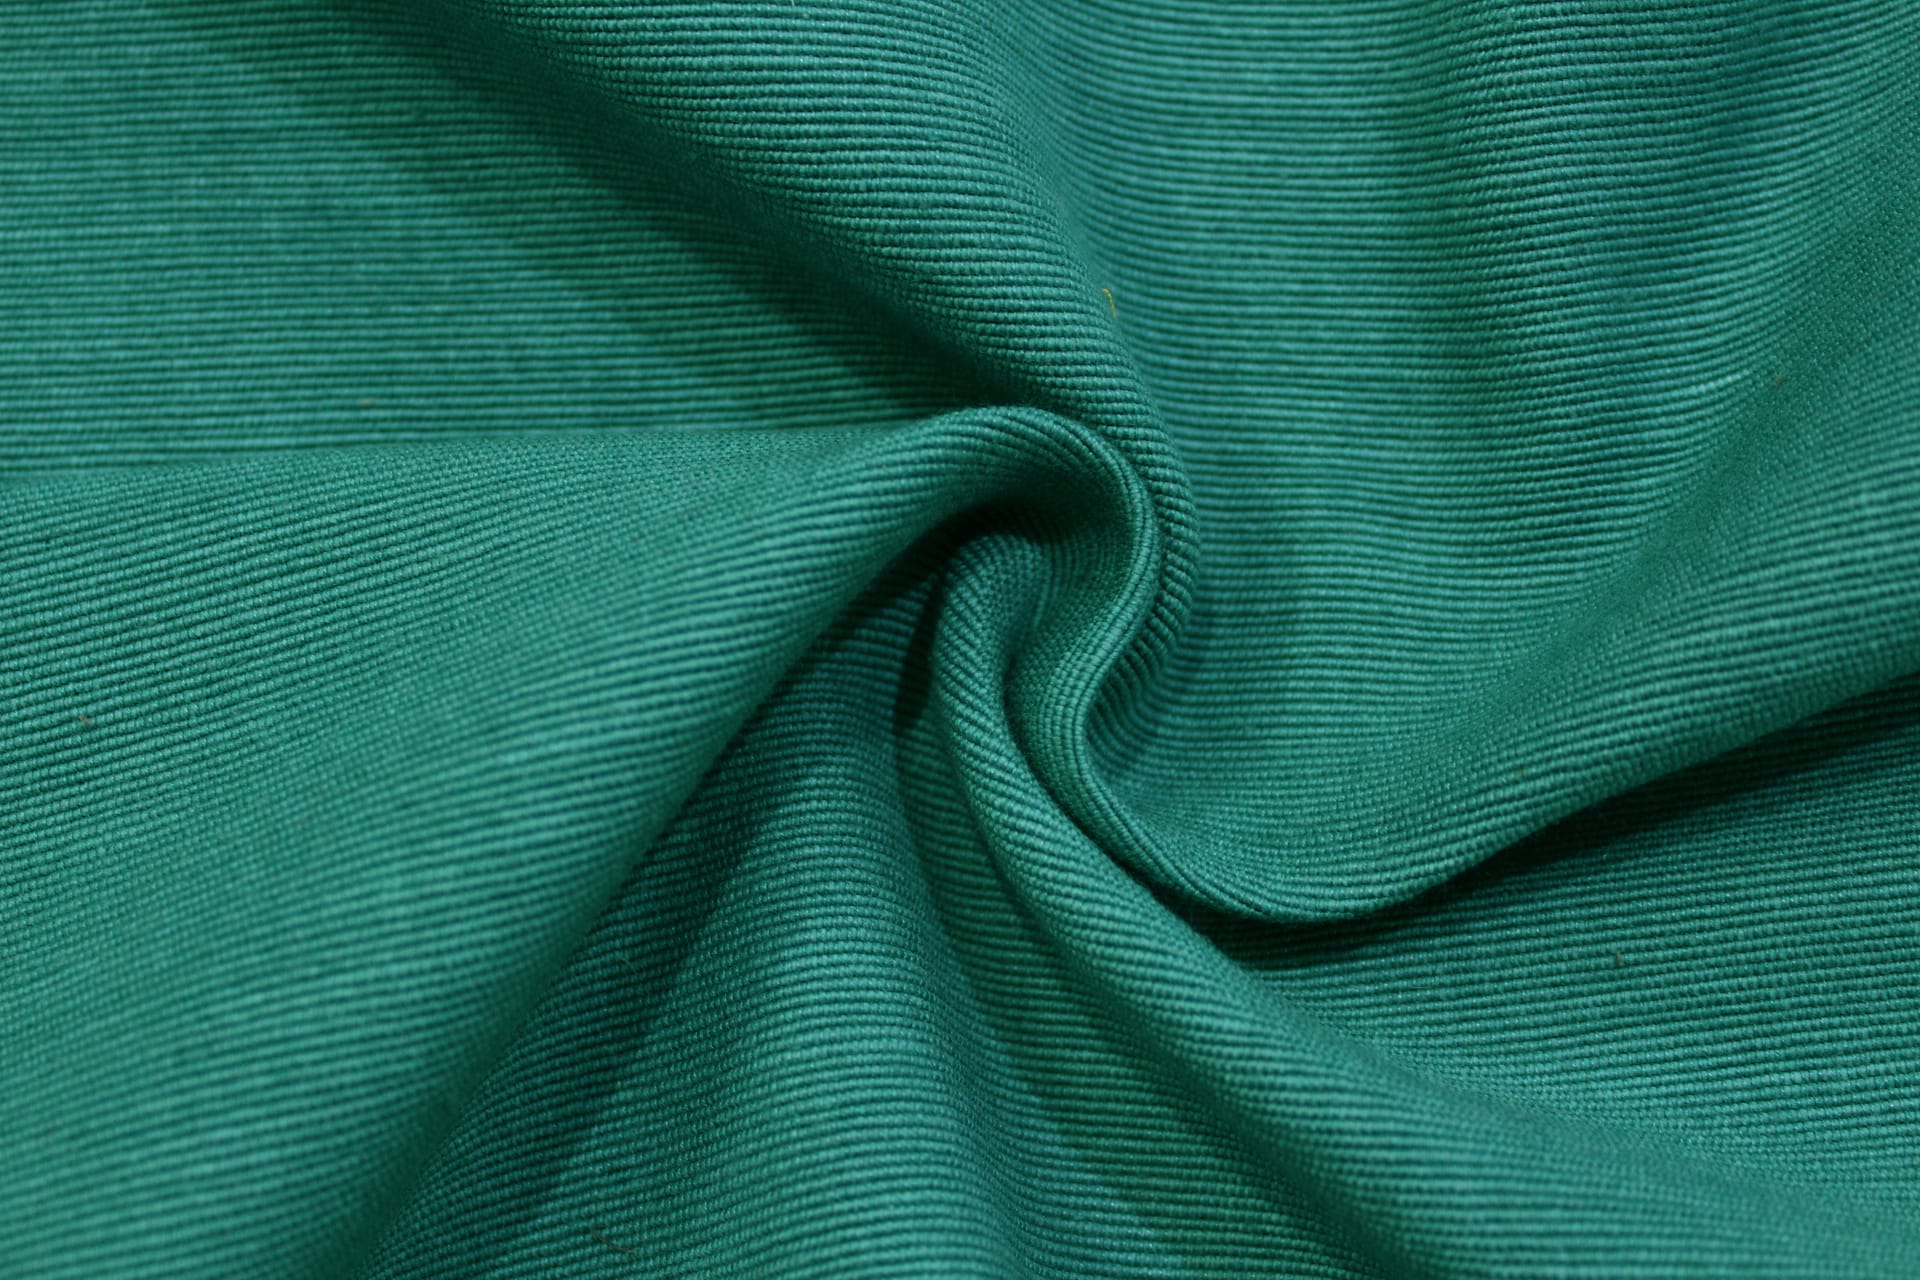 Leek Handloom Corded Weave 330 GSM Plain Cotton Fabric (122 cms) online in India